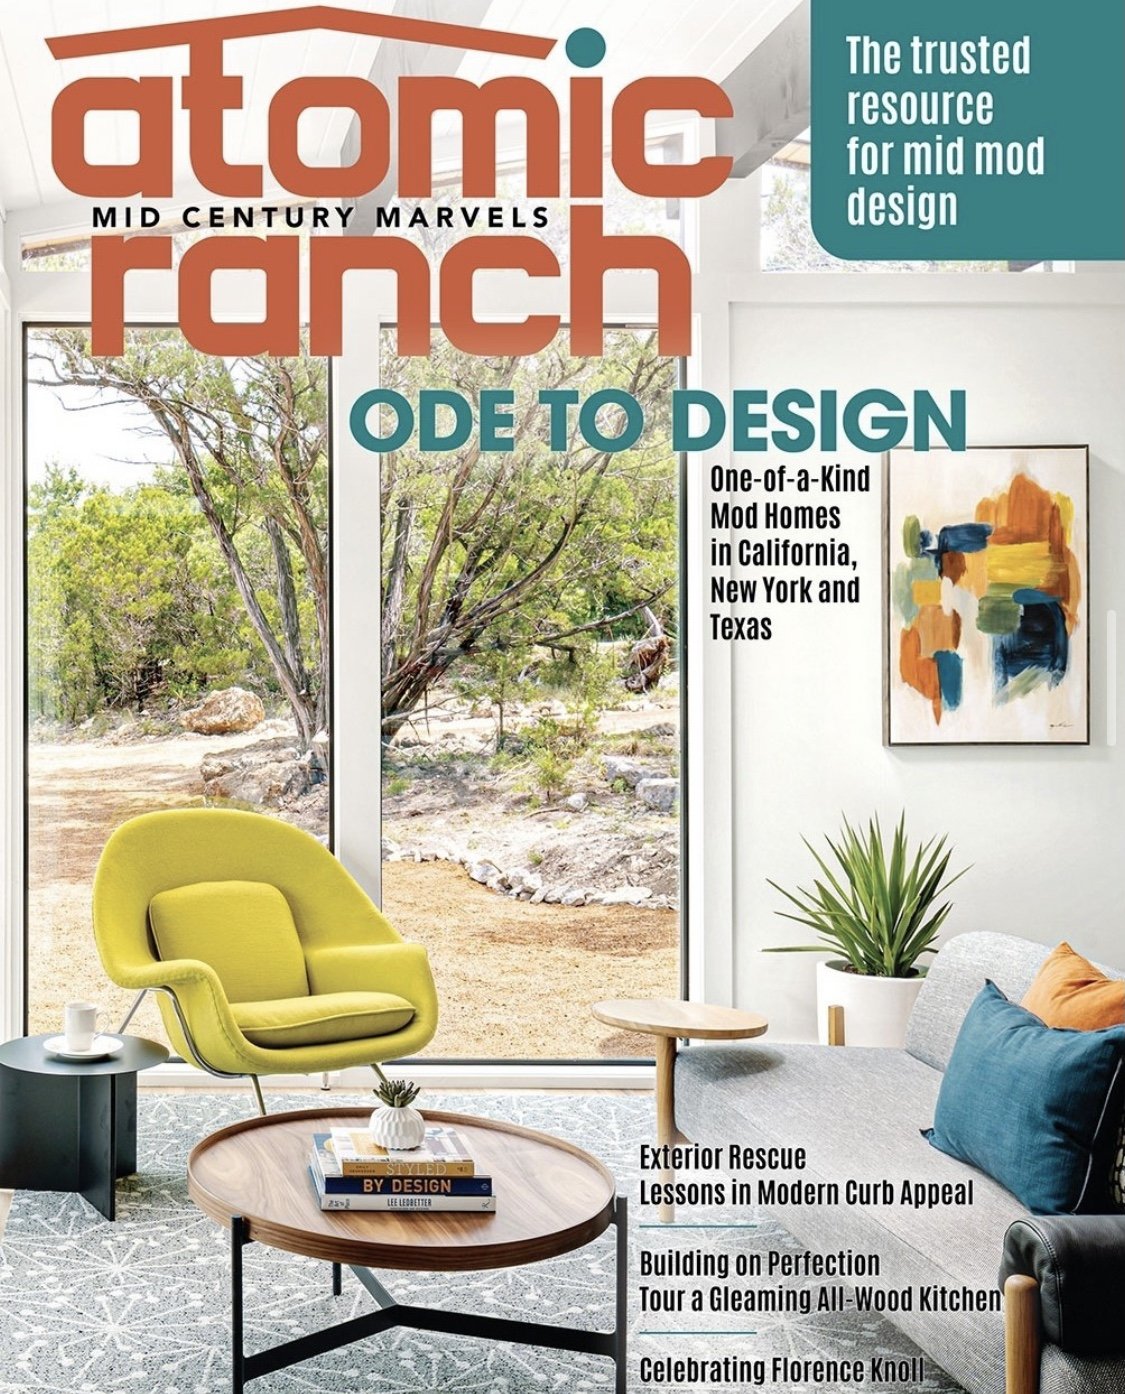 Breathe Design Studio's interior design featured on the cover of Atomic Ranch Magazine